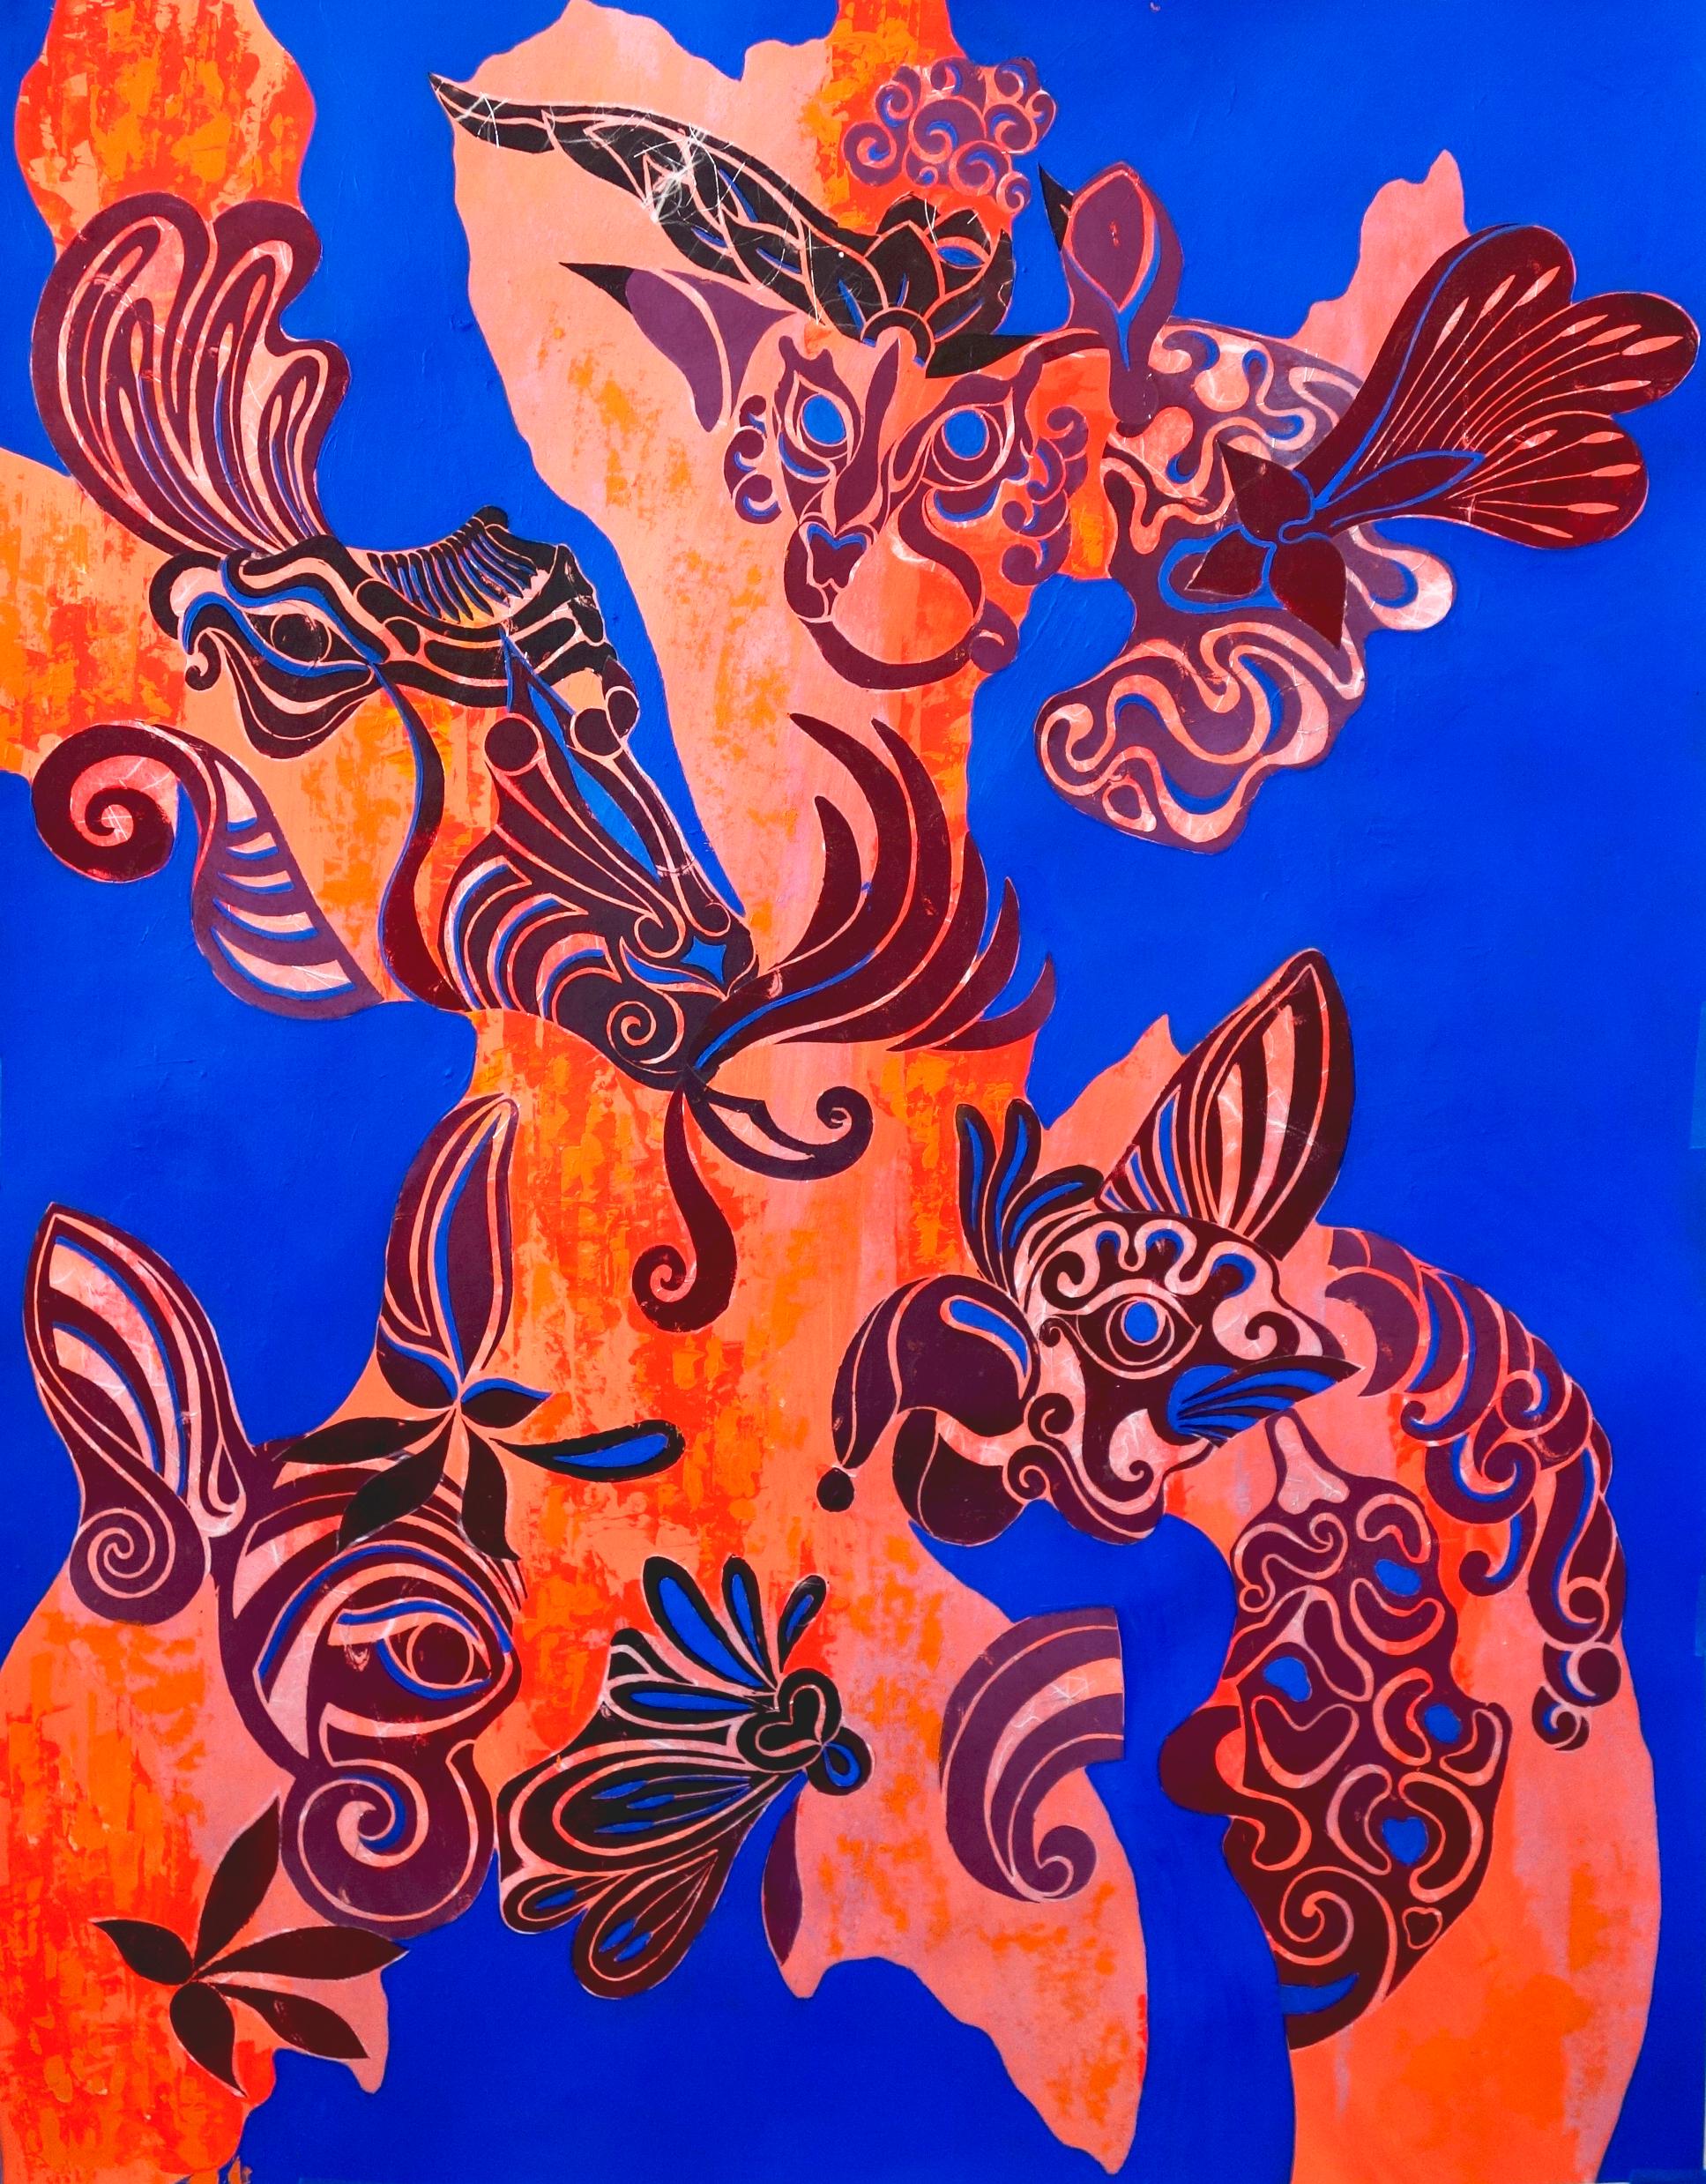 Aima Saint Hunon Nude Painting -  Original collage on paper, animal and greenery, blue orange and grey tone